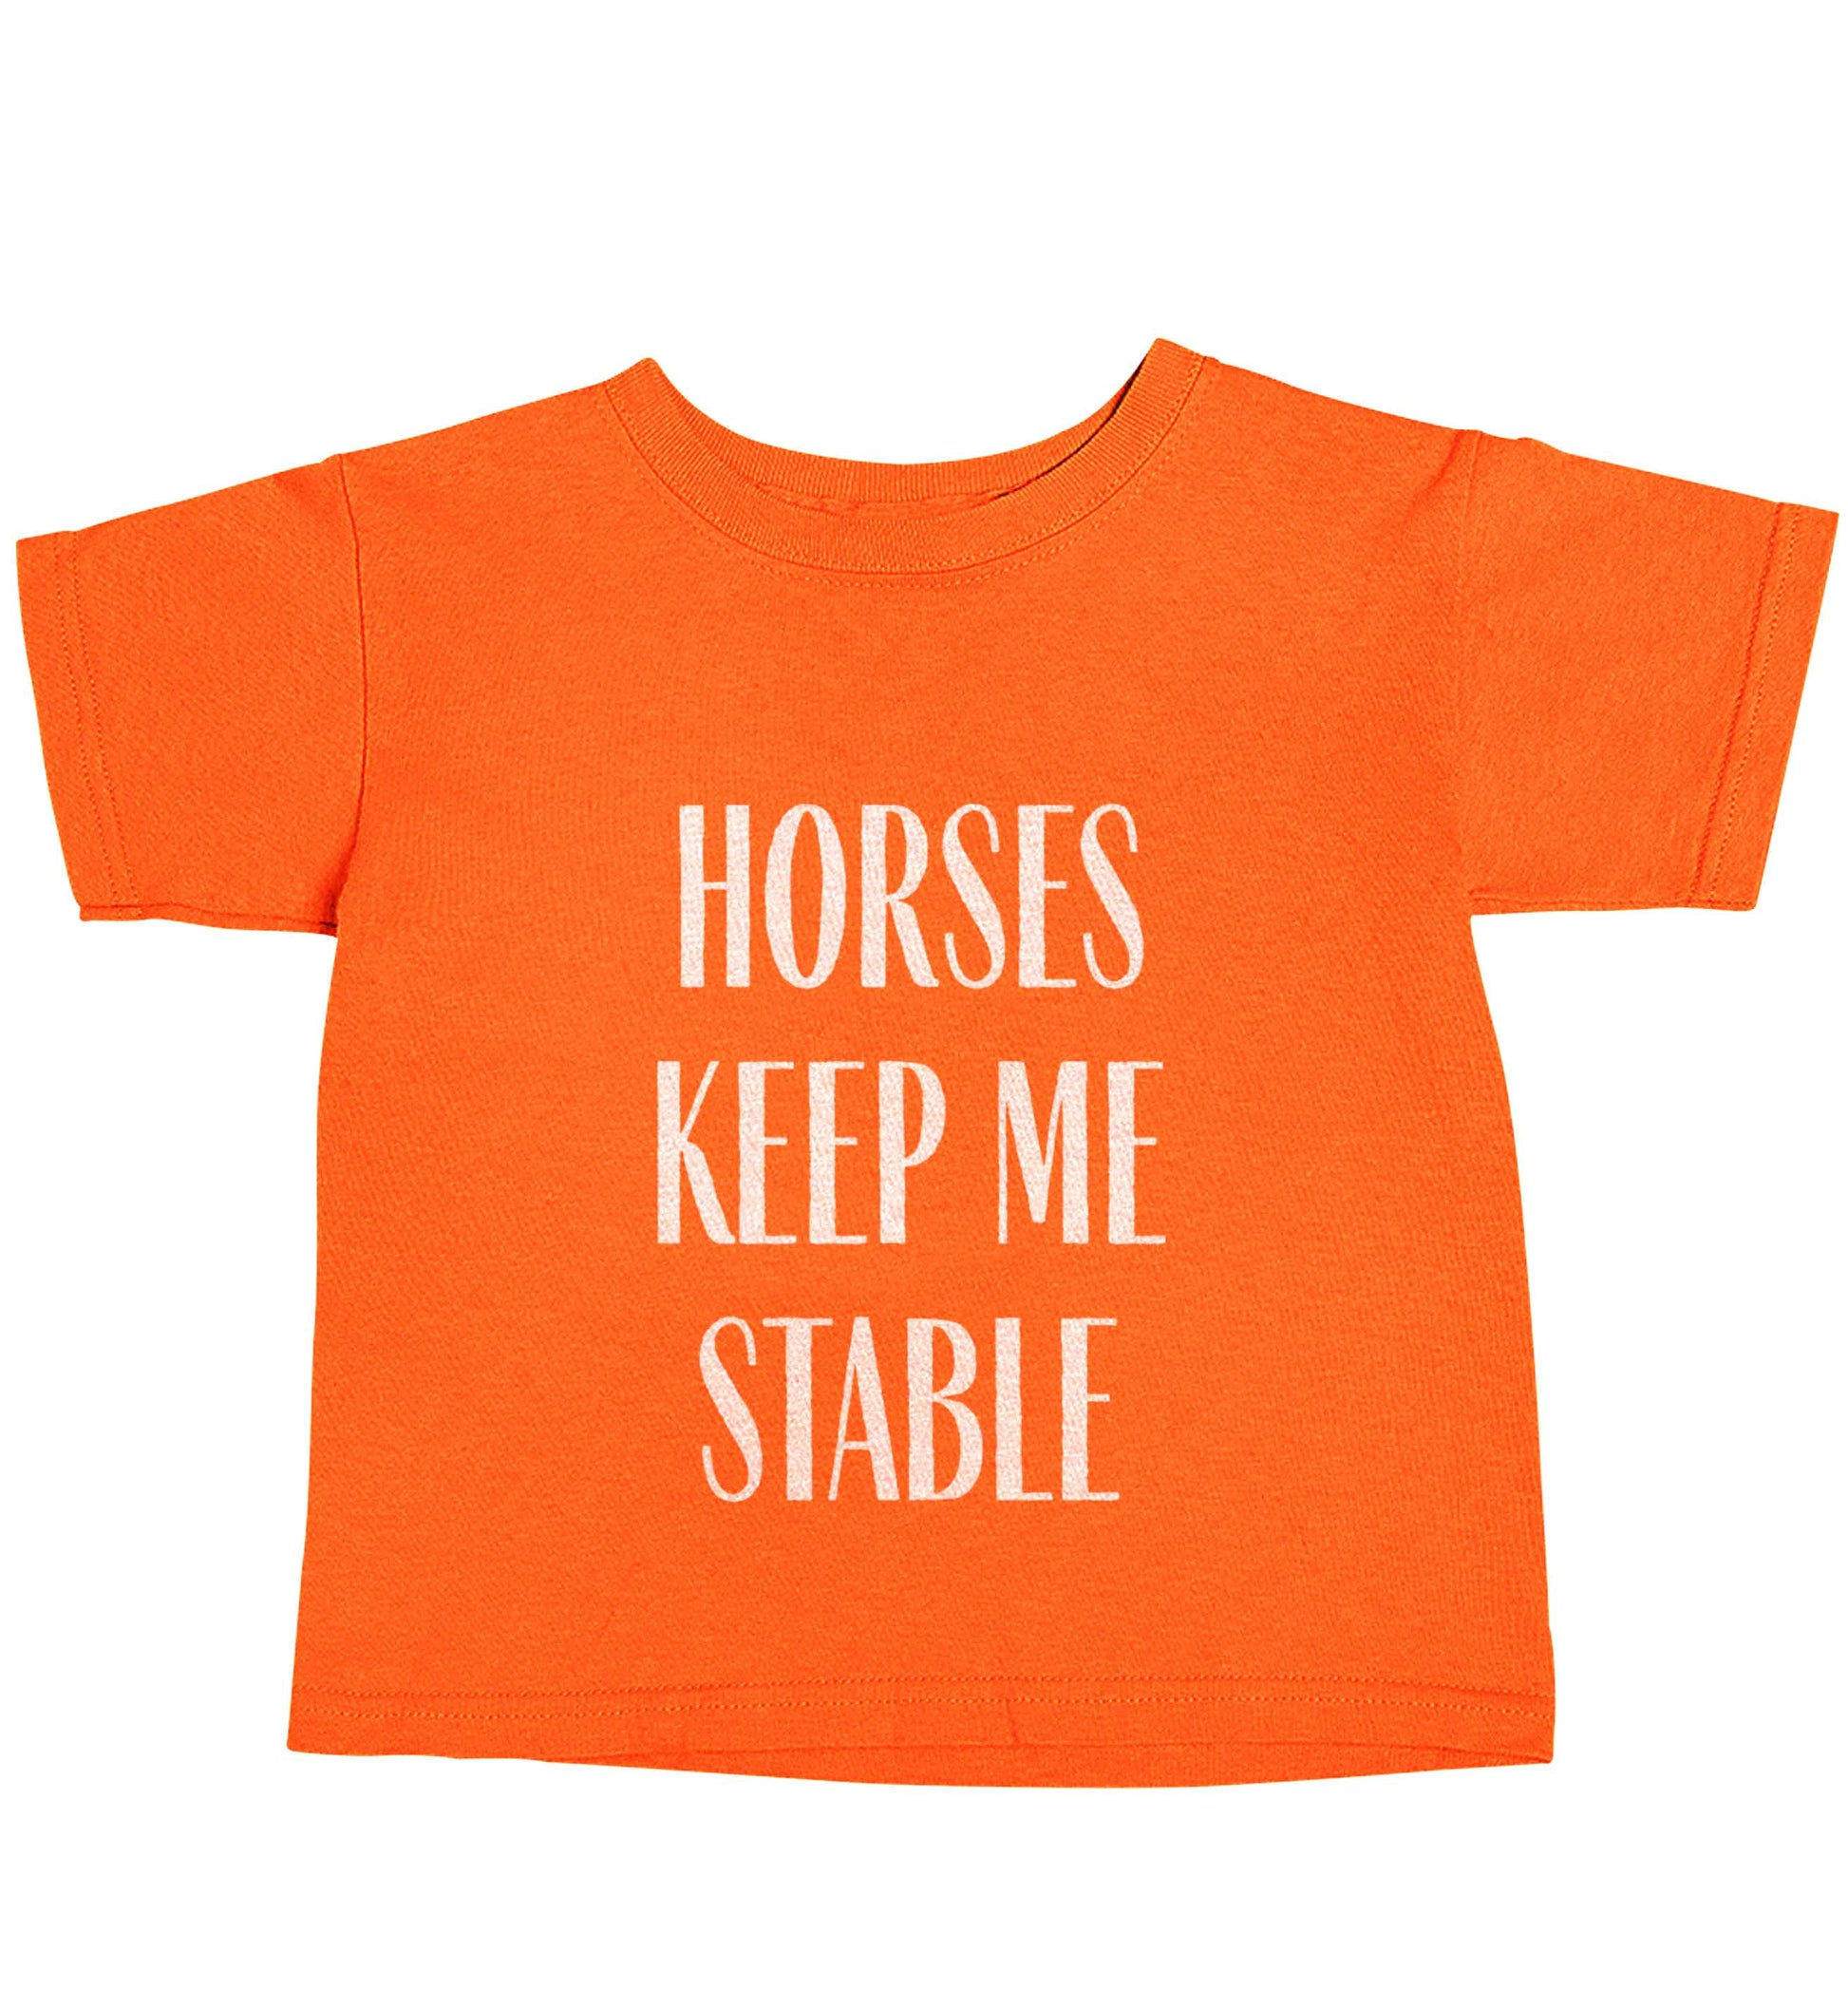 Horses keep me stable orange baby toddler Tshirt 2 Years